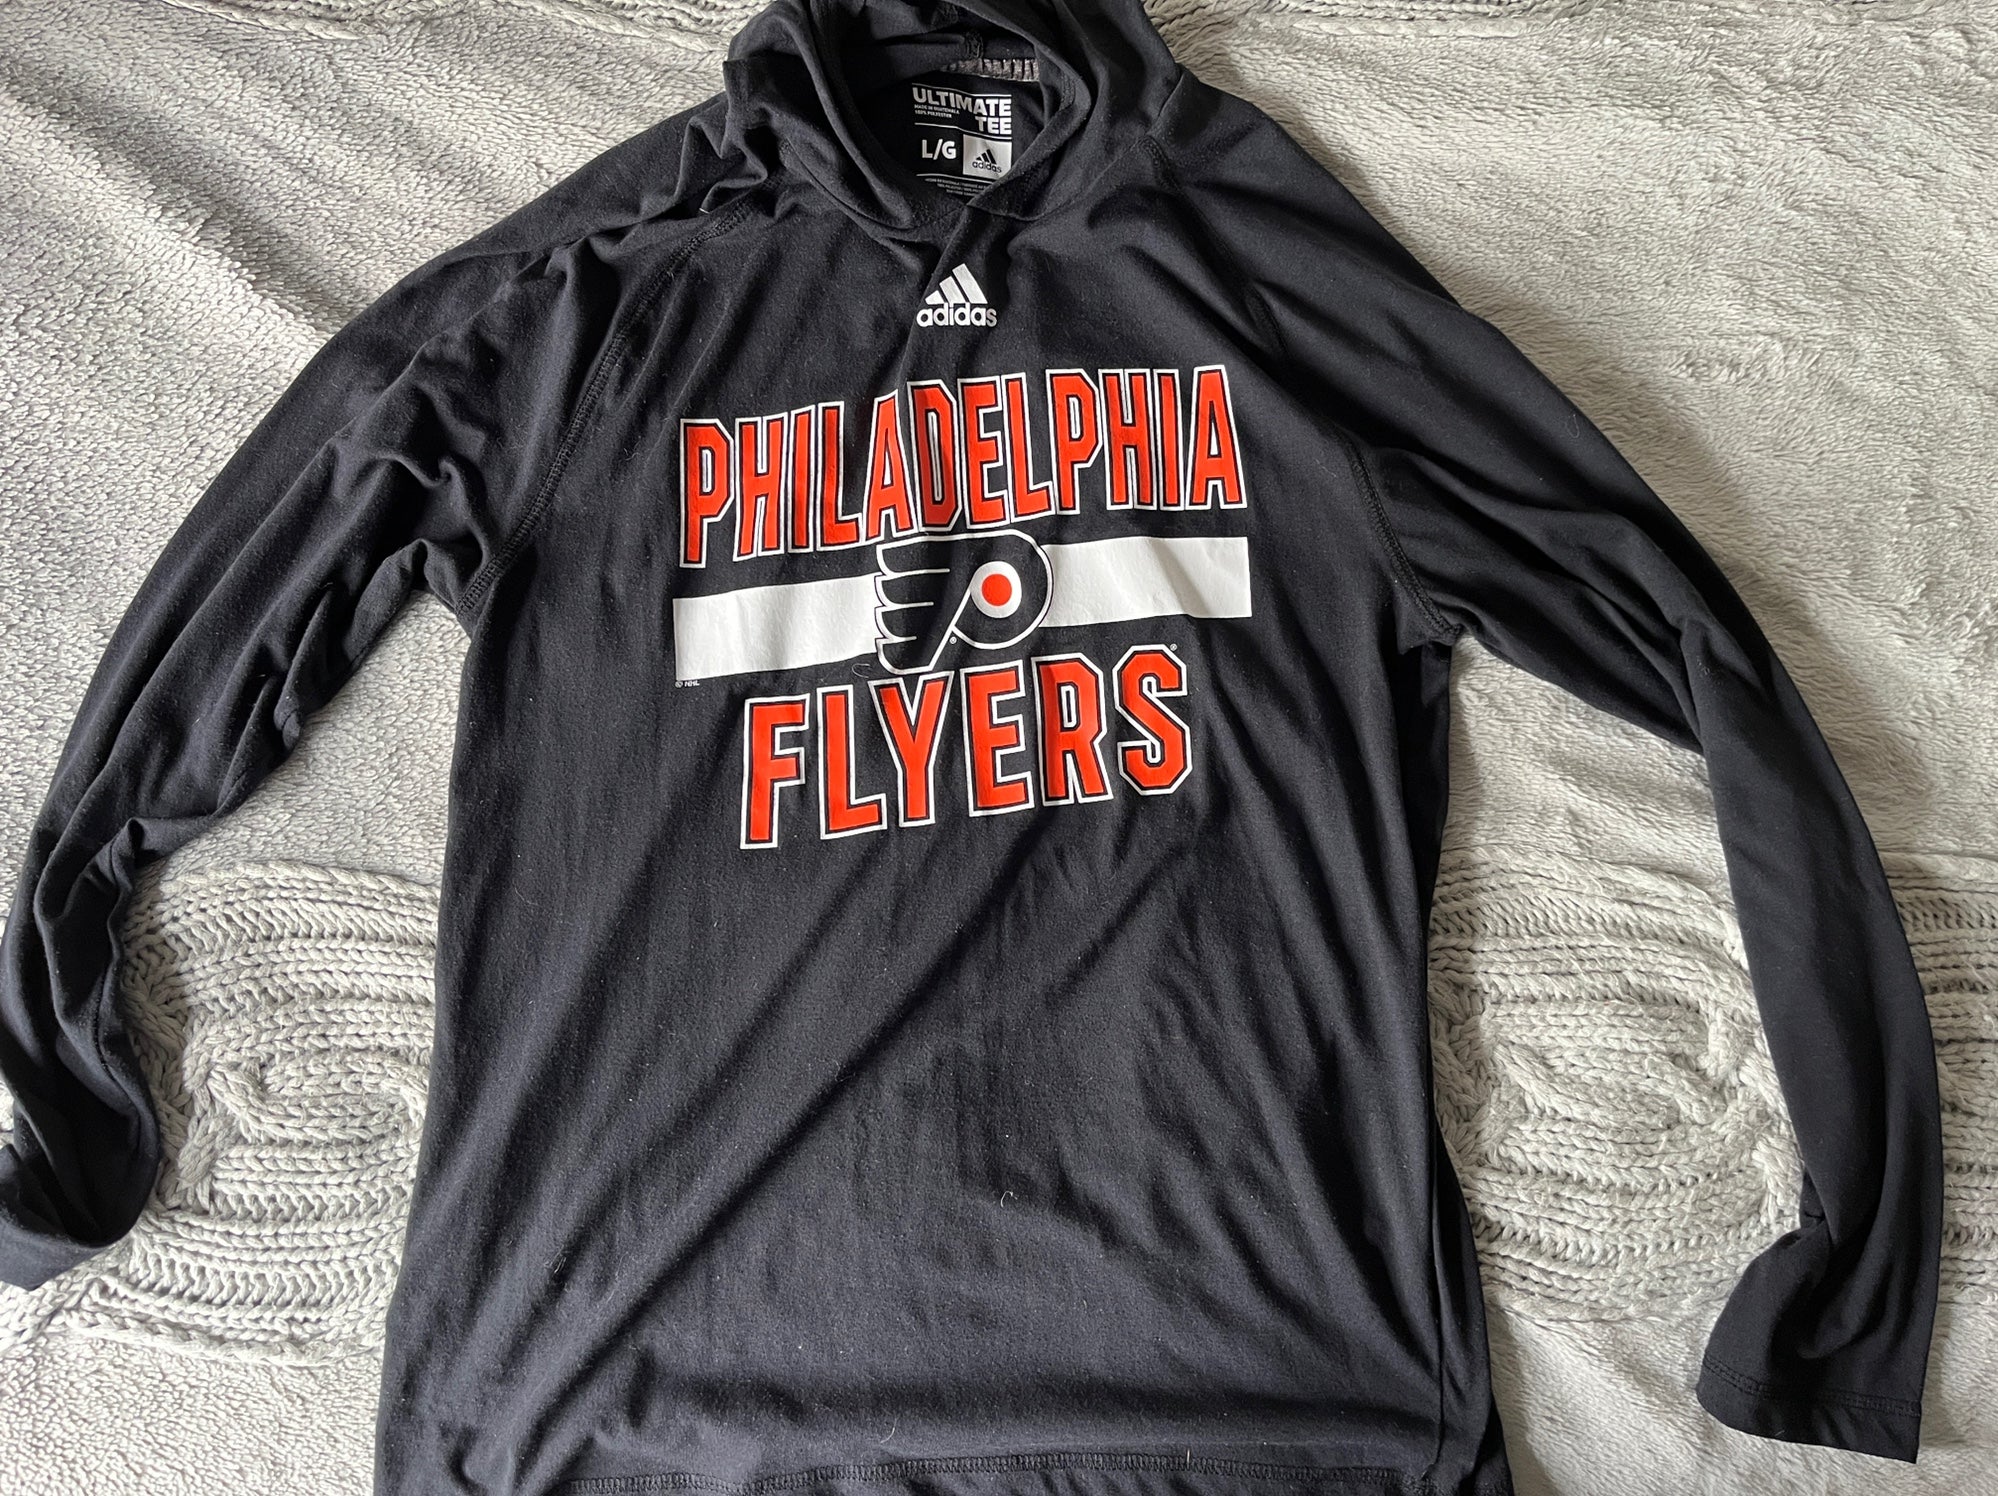 adidas Flyers 22 NHL Pullover Hoodie - Orange | Men's Hockey | adidas US